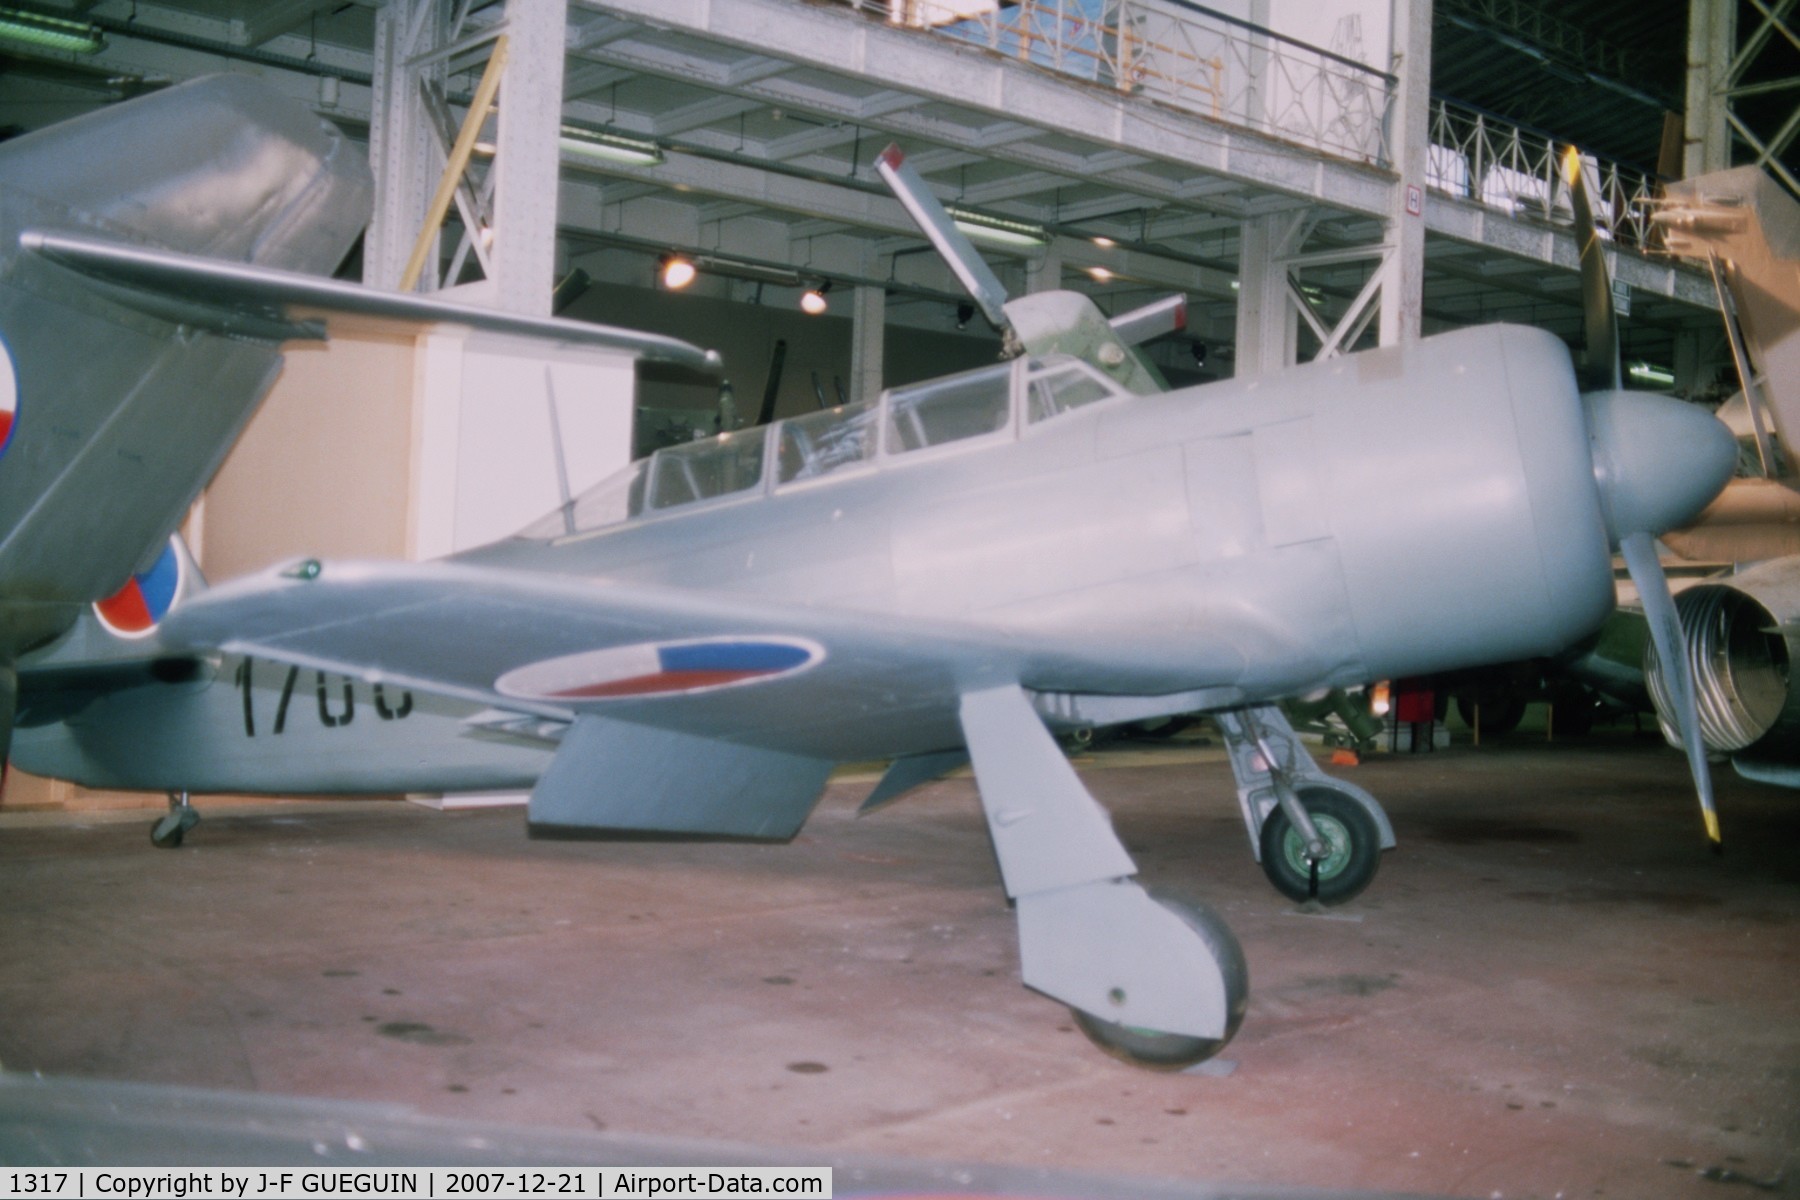 1317, 1948 Let C-11 (Yak-11) C/N 171317, C-11 preserved in belgian Musée Royal de l'Armée.